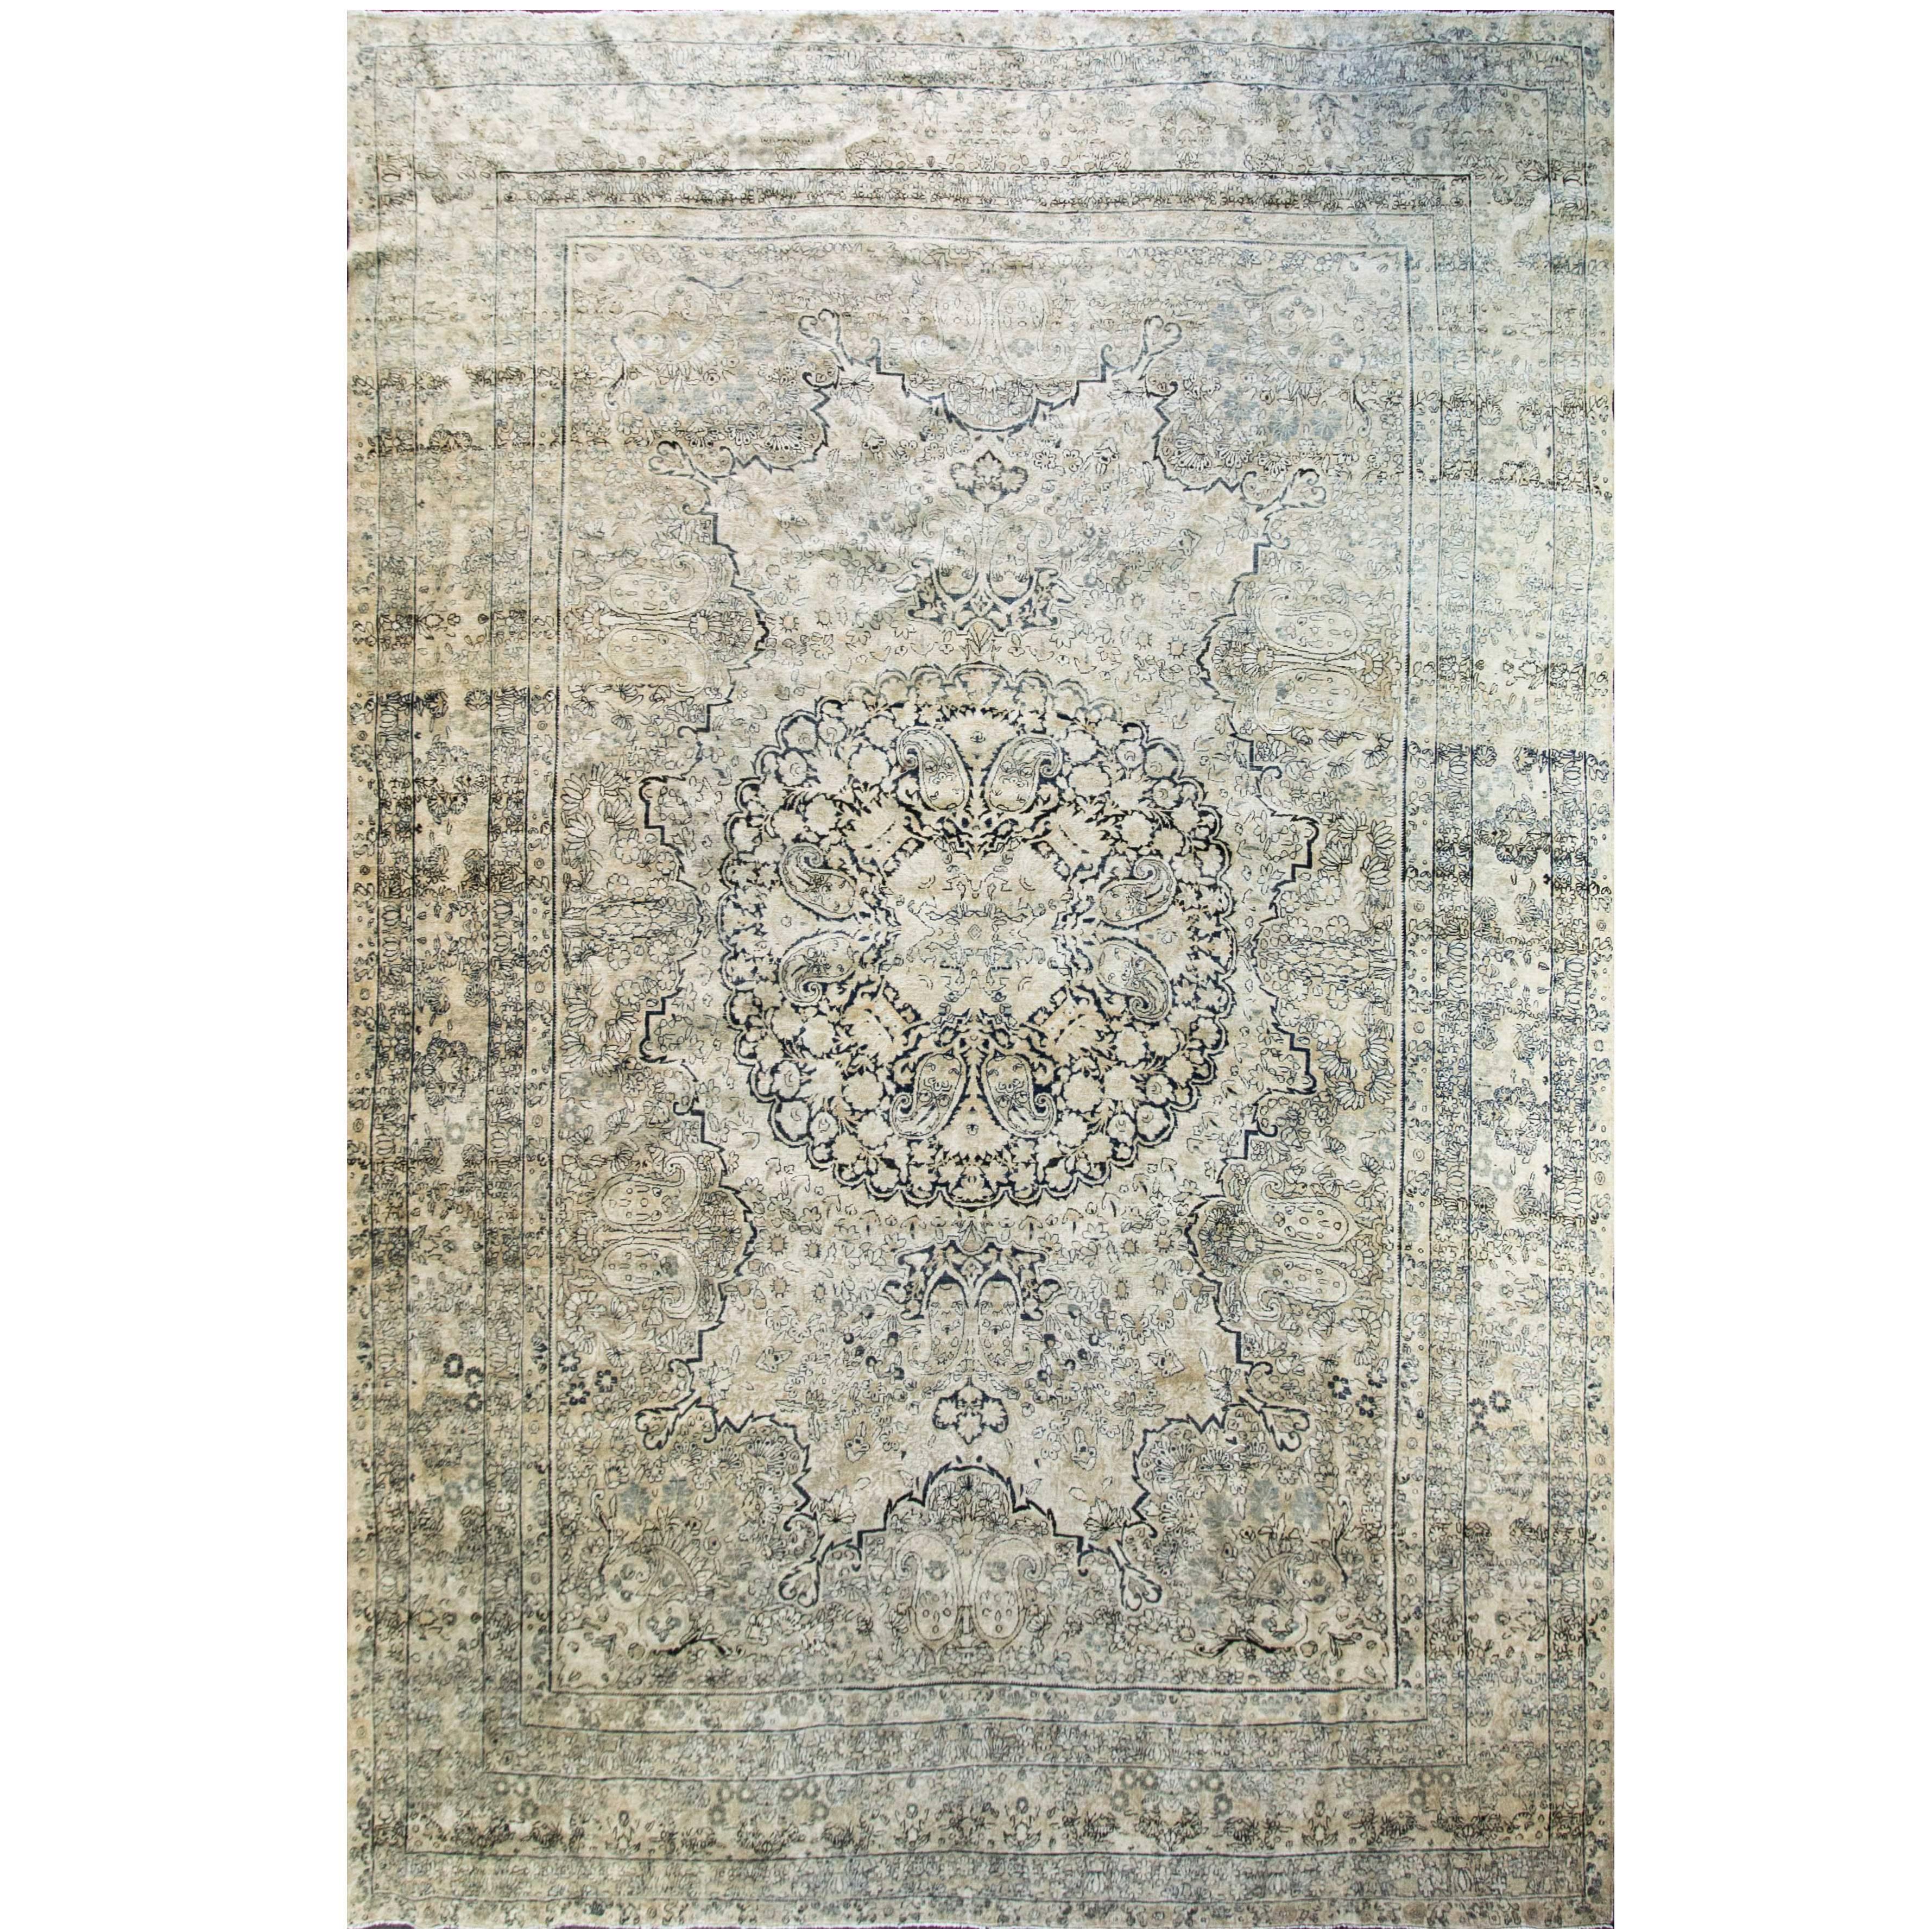  Antique Persian Kermanshah Carpet, 9'7" x 14'6" For Sale